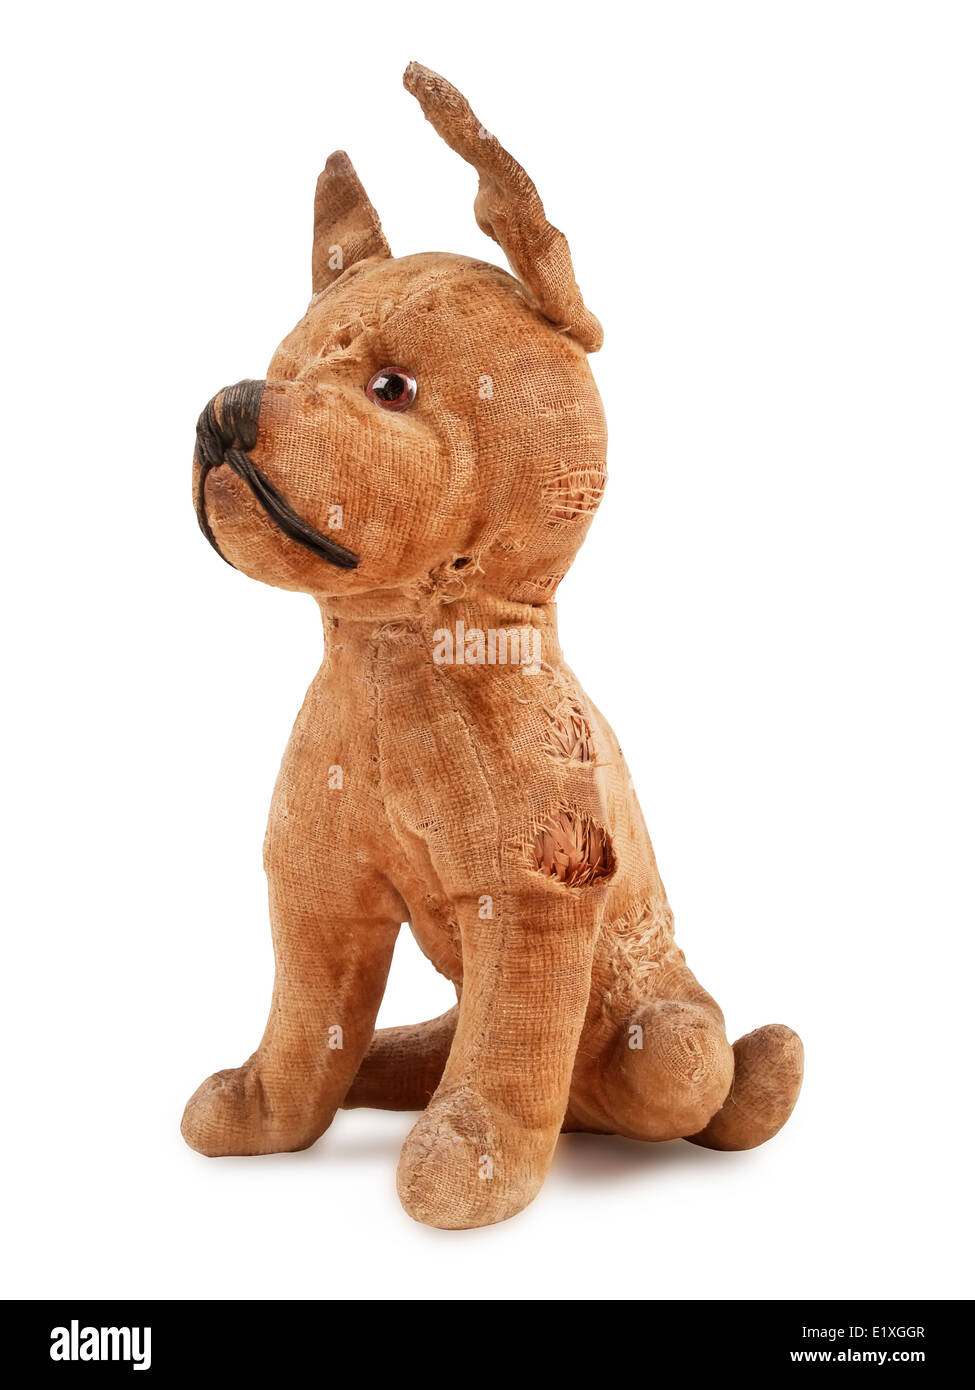 vintage toy dog, stuffed with straw, isolated on white background Stock Photo